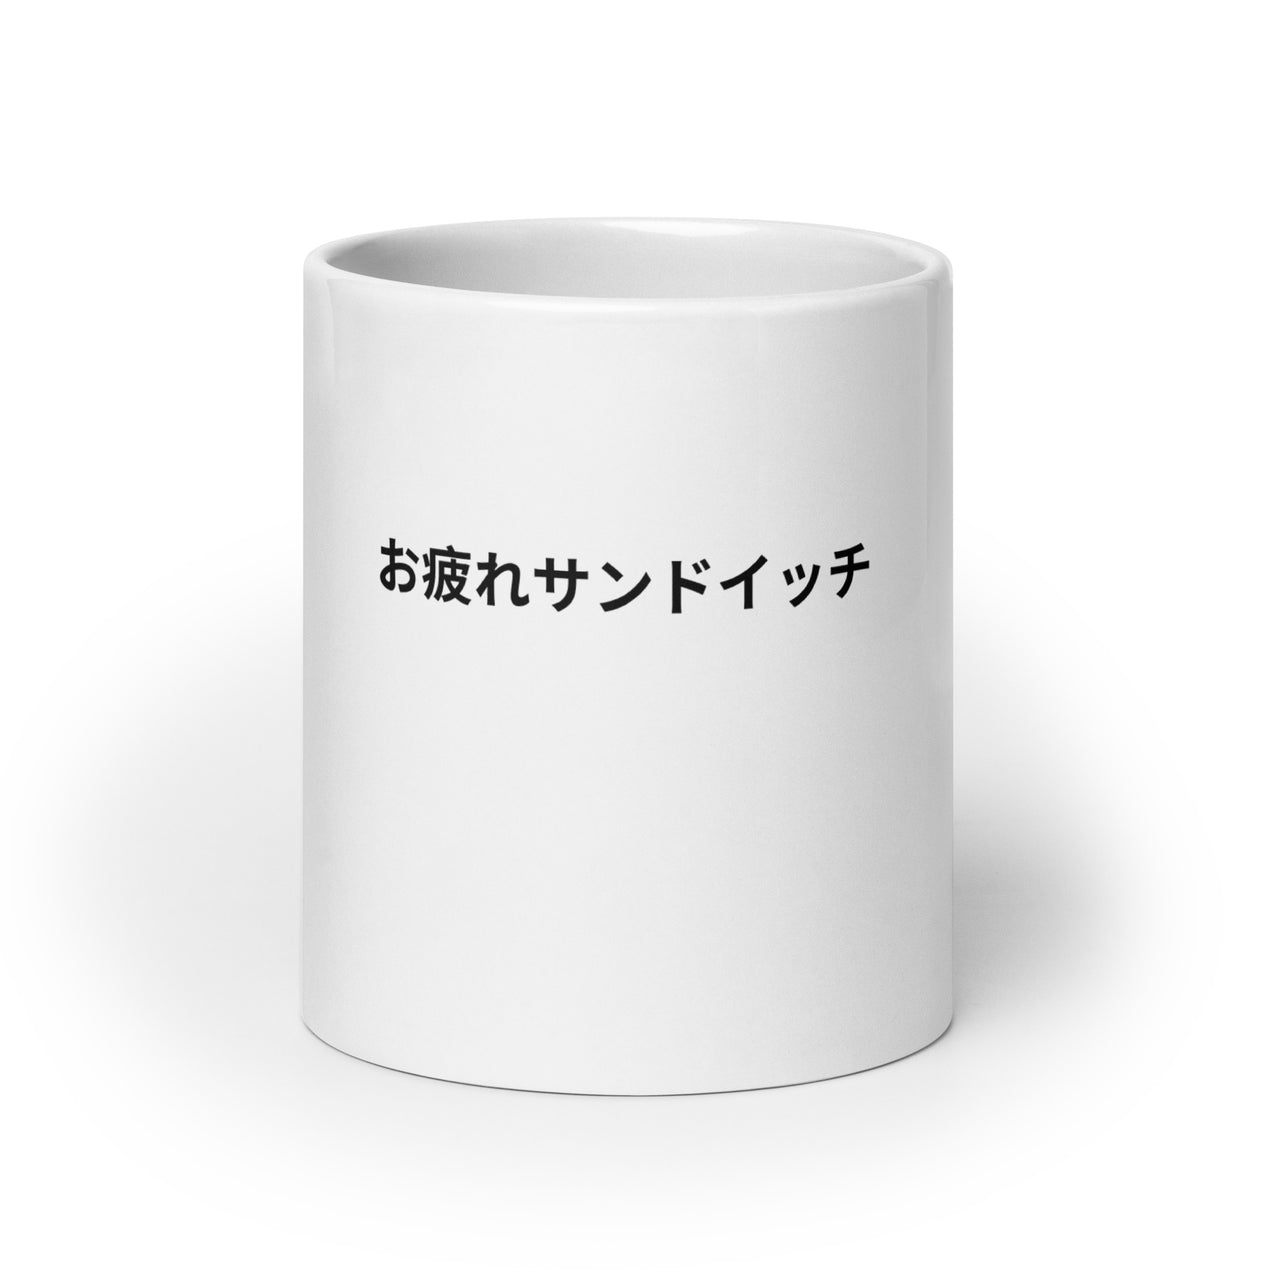 Good Work Sandwich in Japanese White Mug